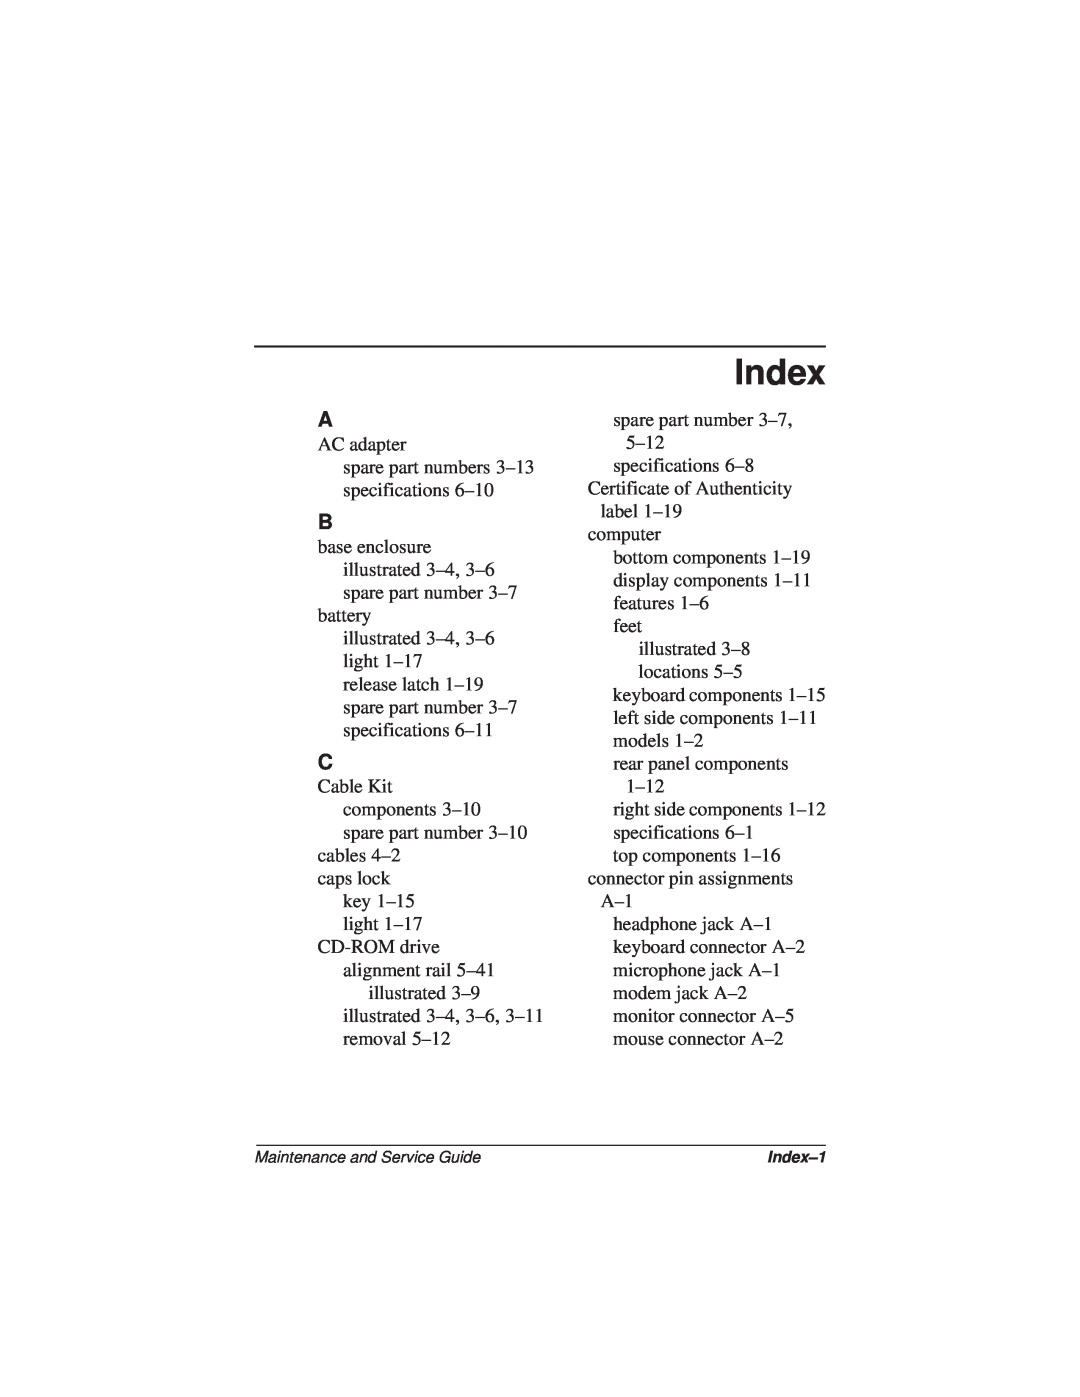 Compaq N110 manual Index 